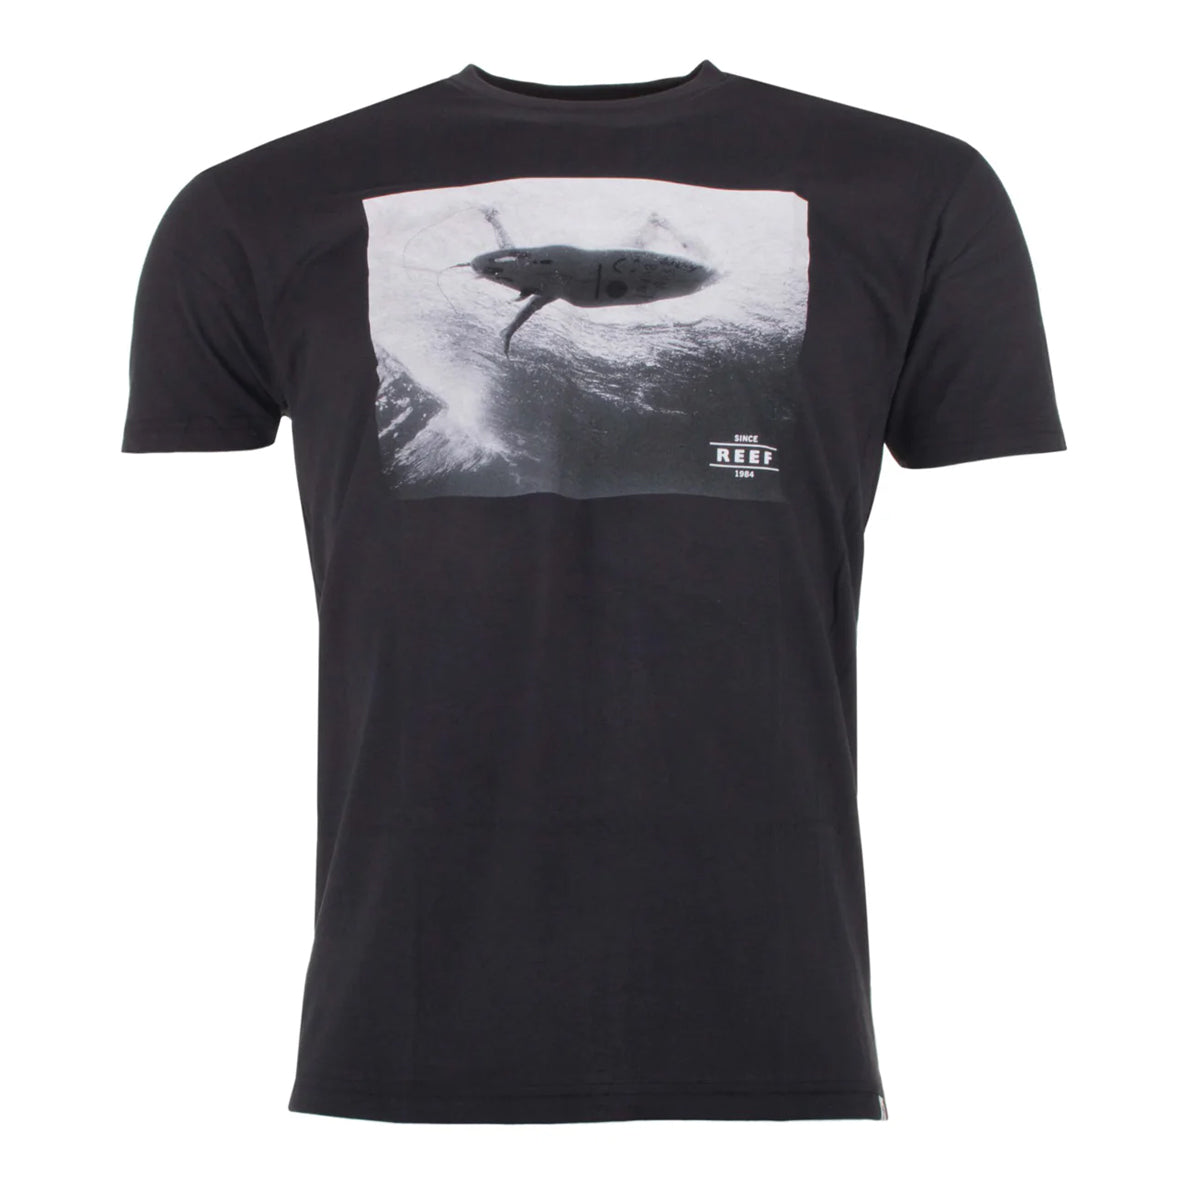 Reef Experience Men's Short-Sleeve Shirts